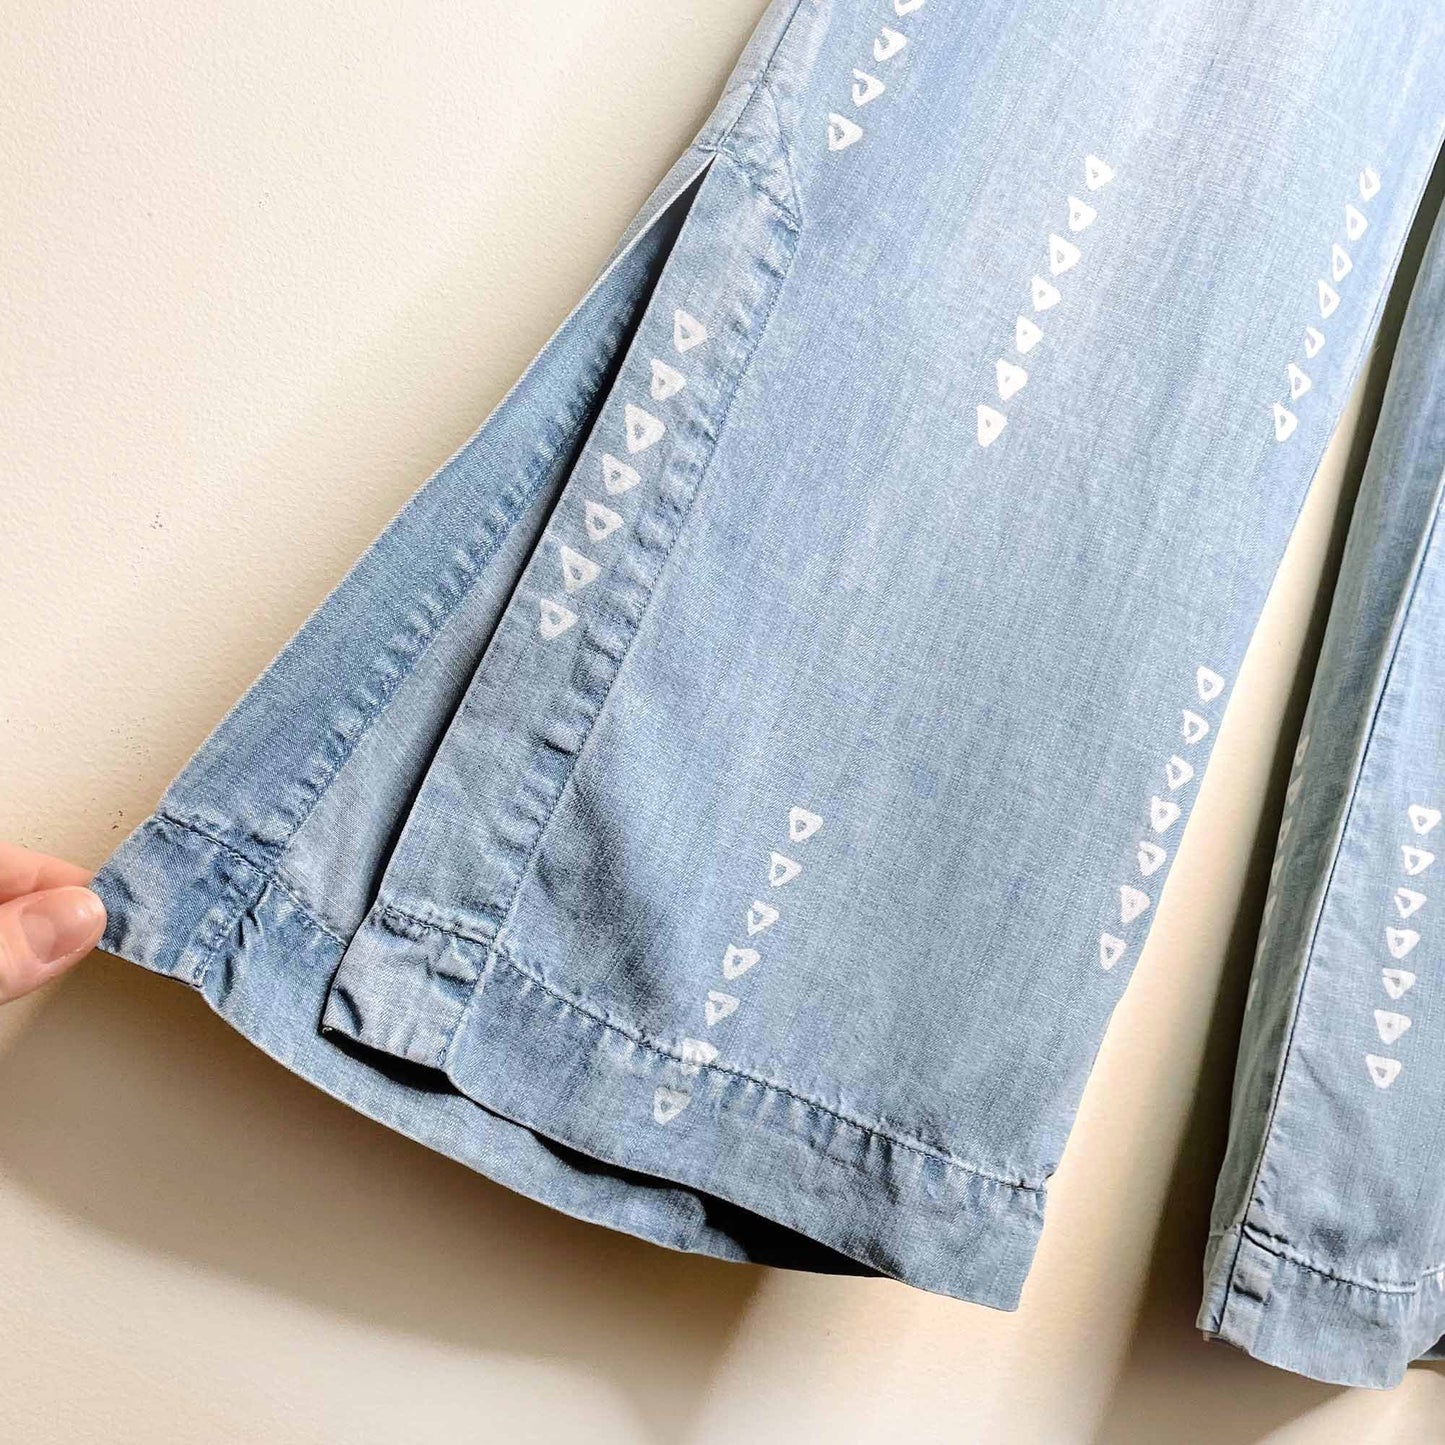 cloth & stone wide leg triangle stripes chambray pants - size small